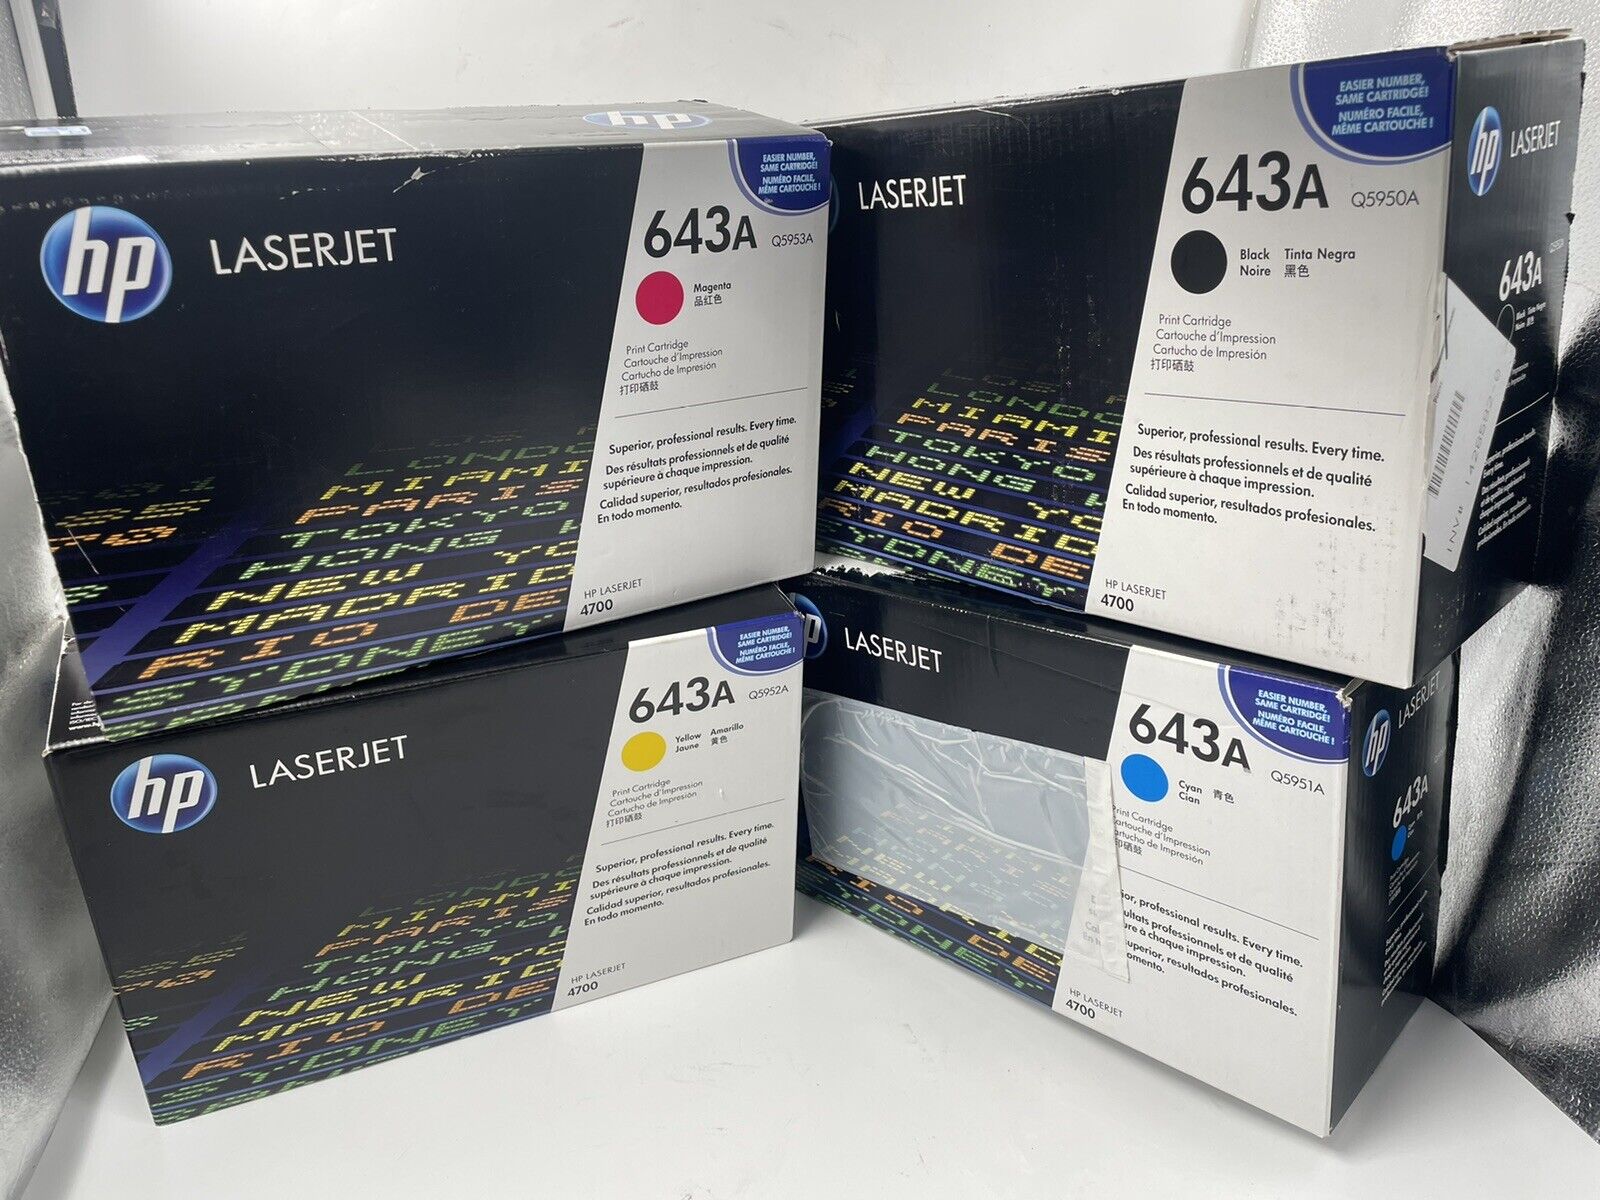 Lot of 4 HP LaserJet Print Cartridge 643A BLACK MAGENTA CYAN and YELLOW *SEALED*